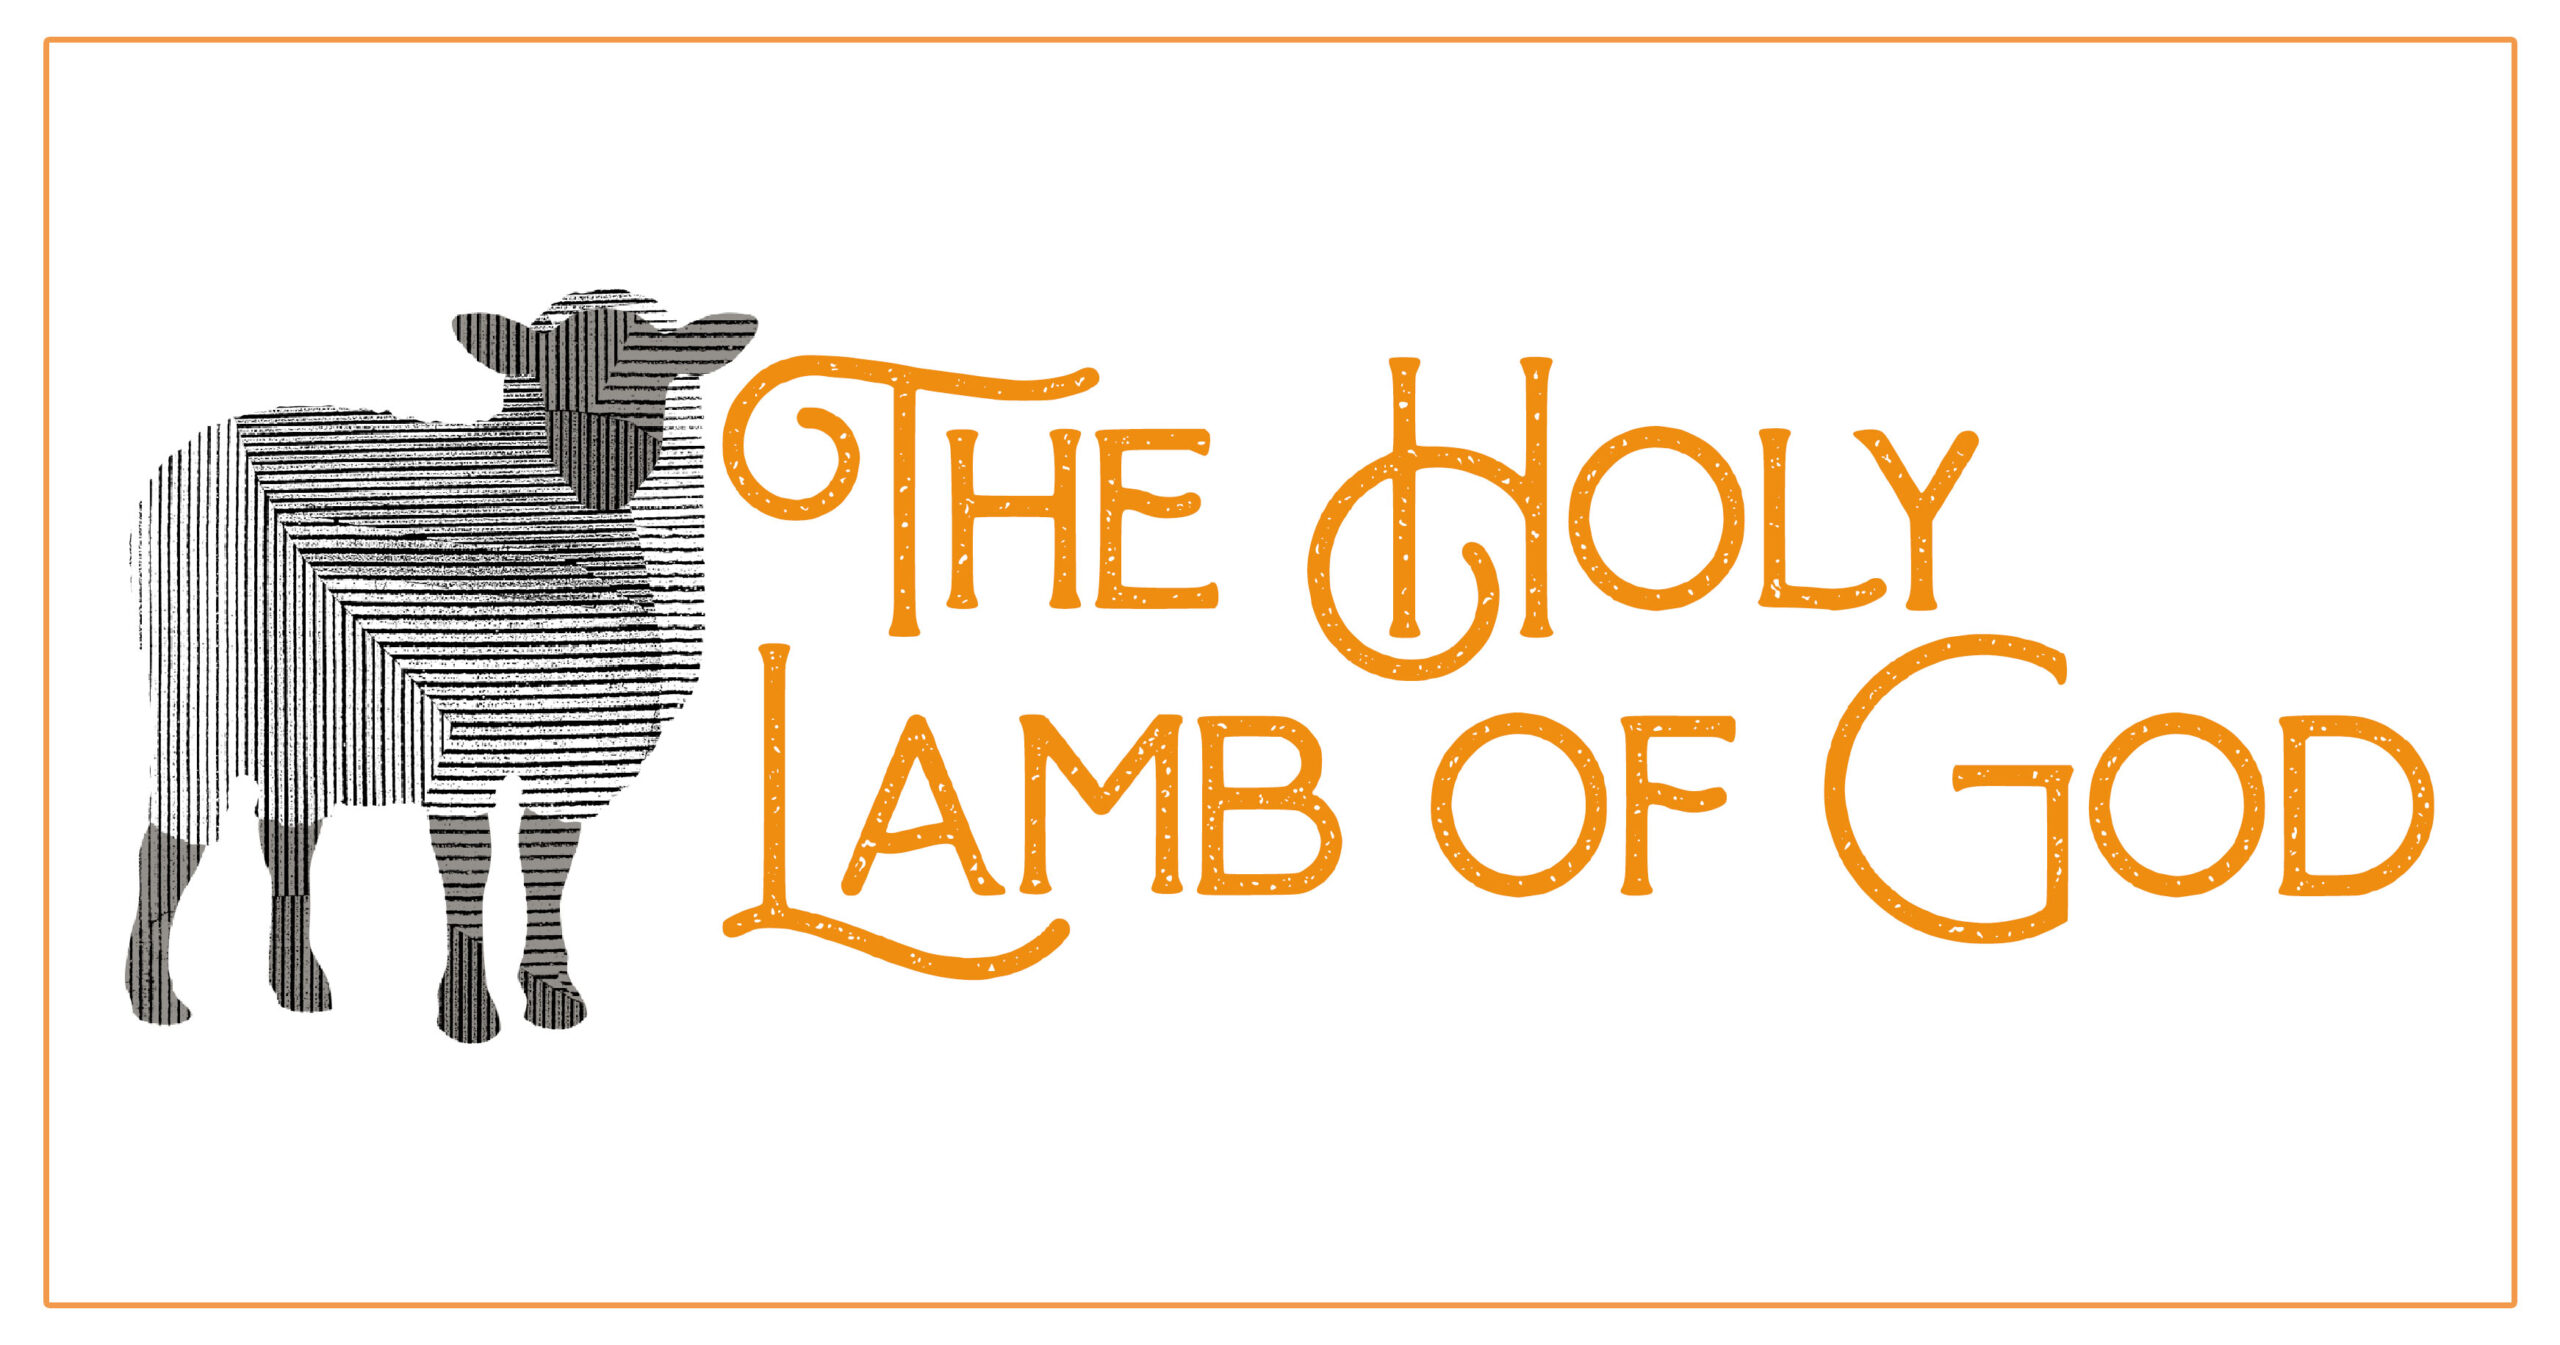 The Holy Lamb of God